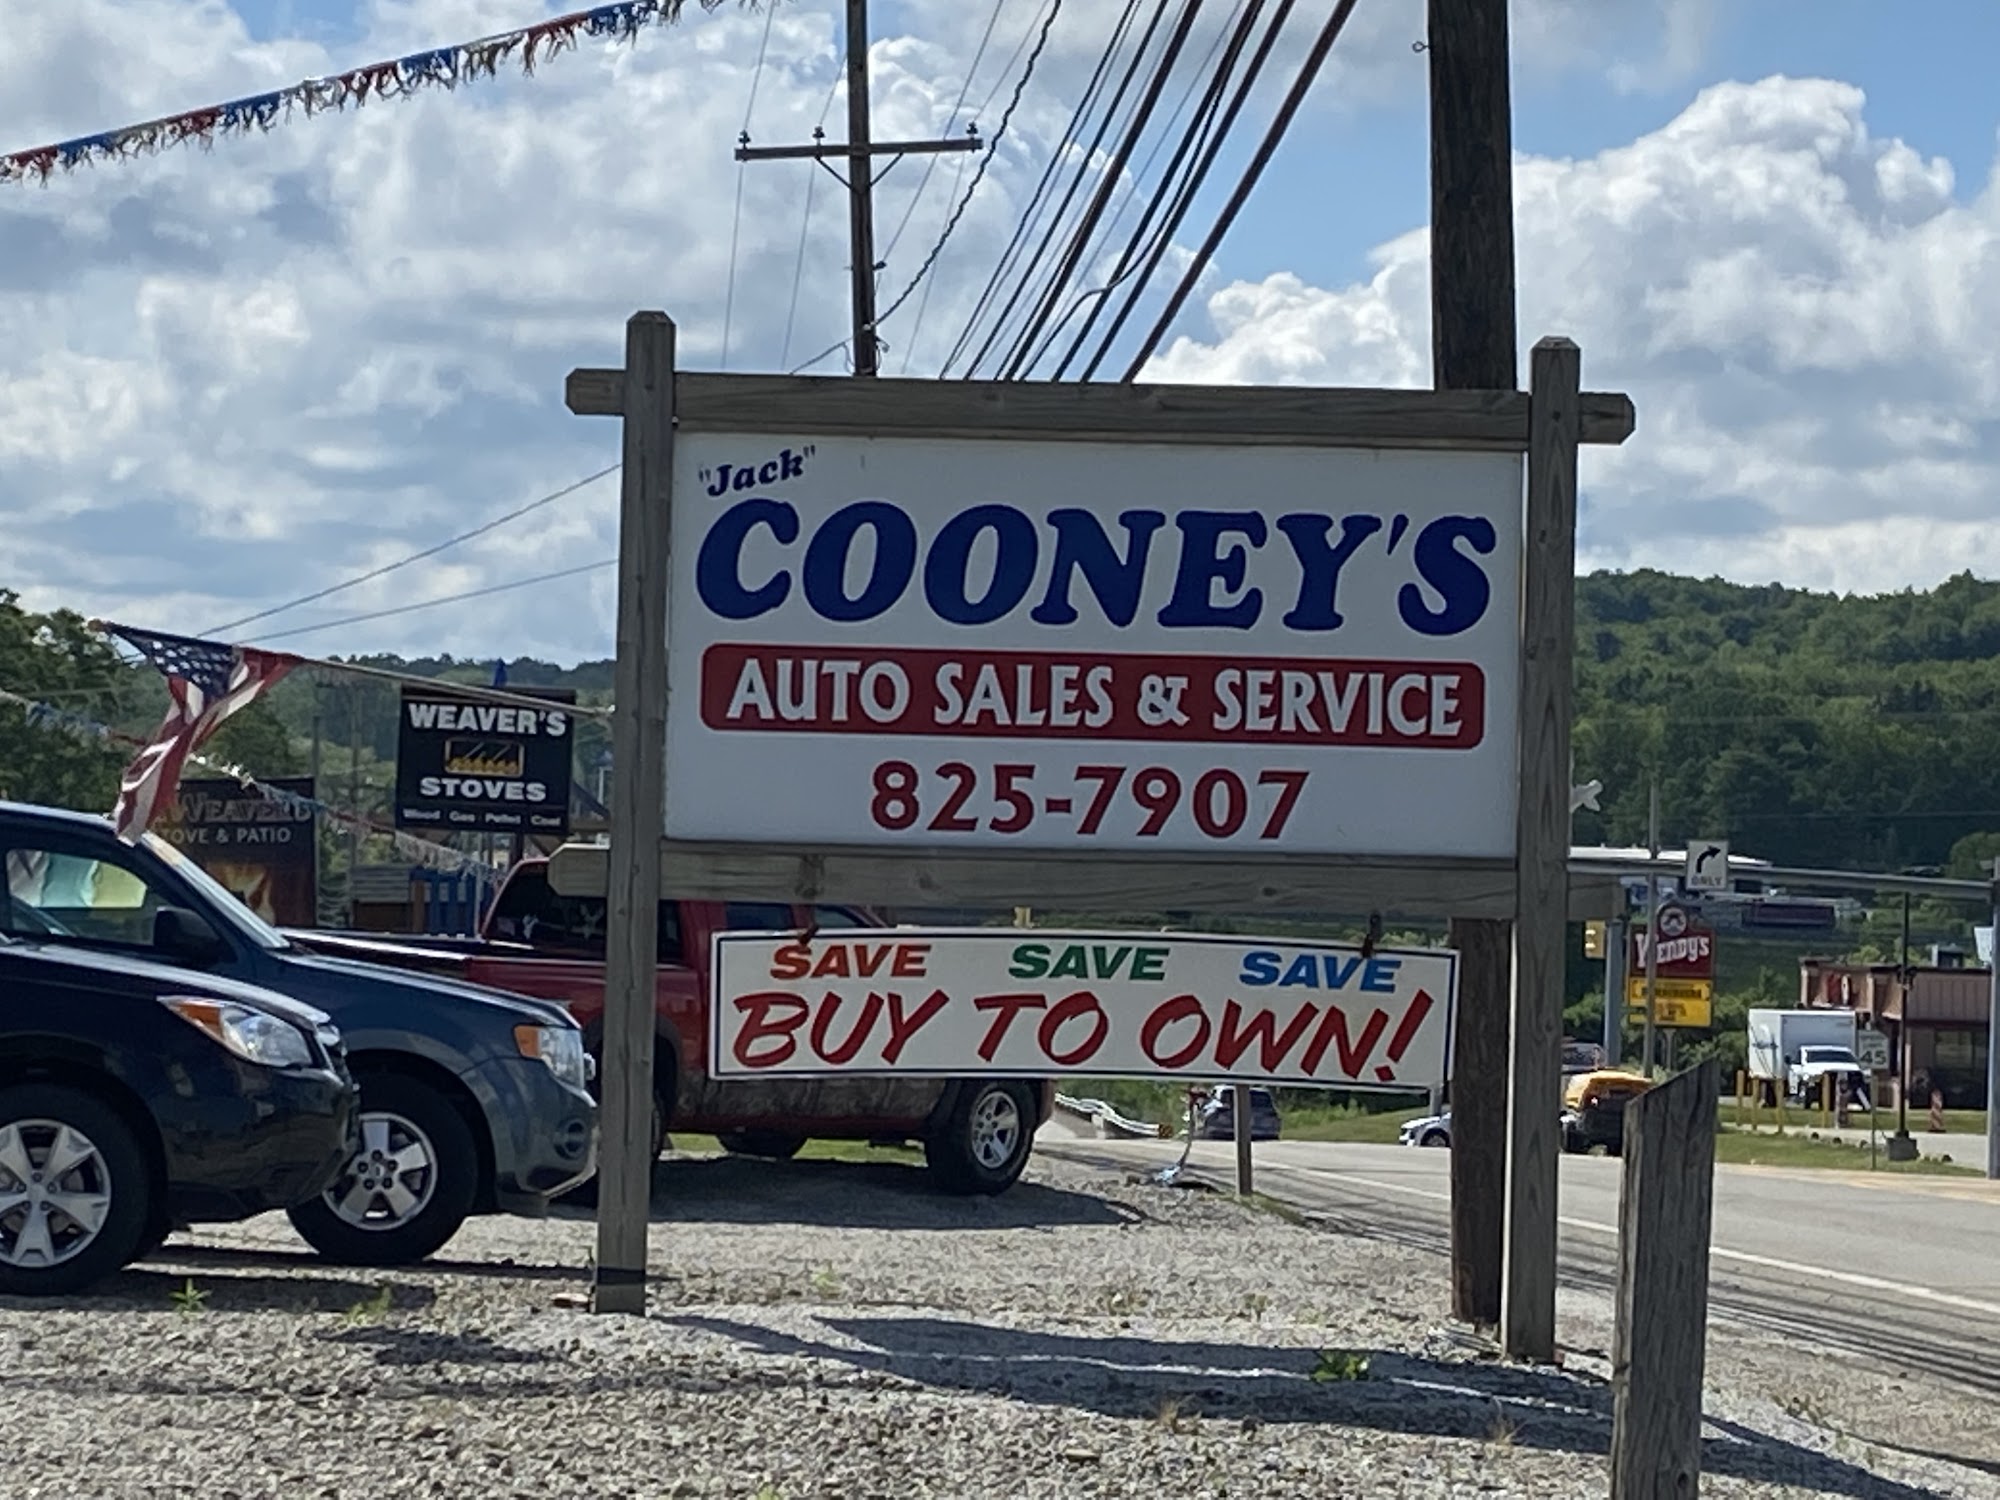 Jack Cooney's Auto Sales